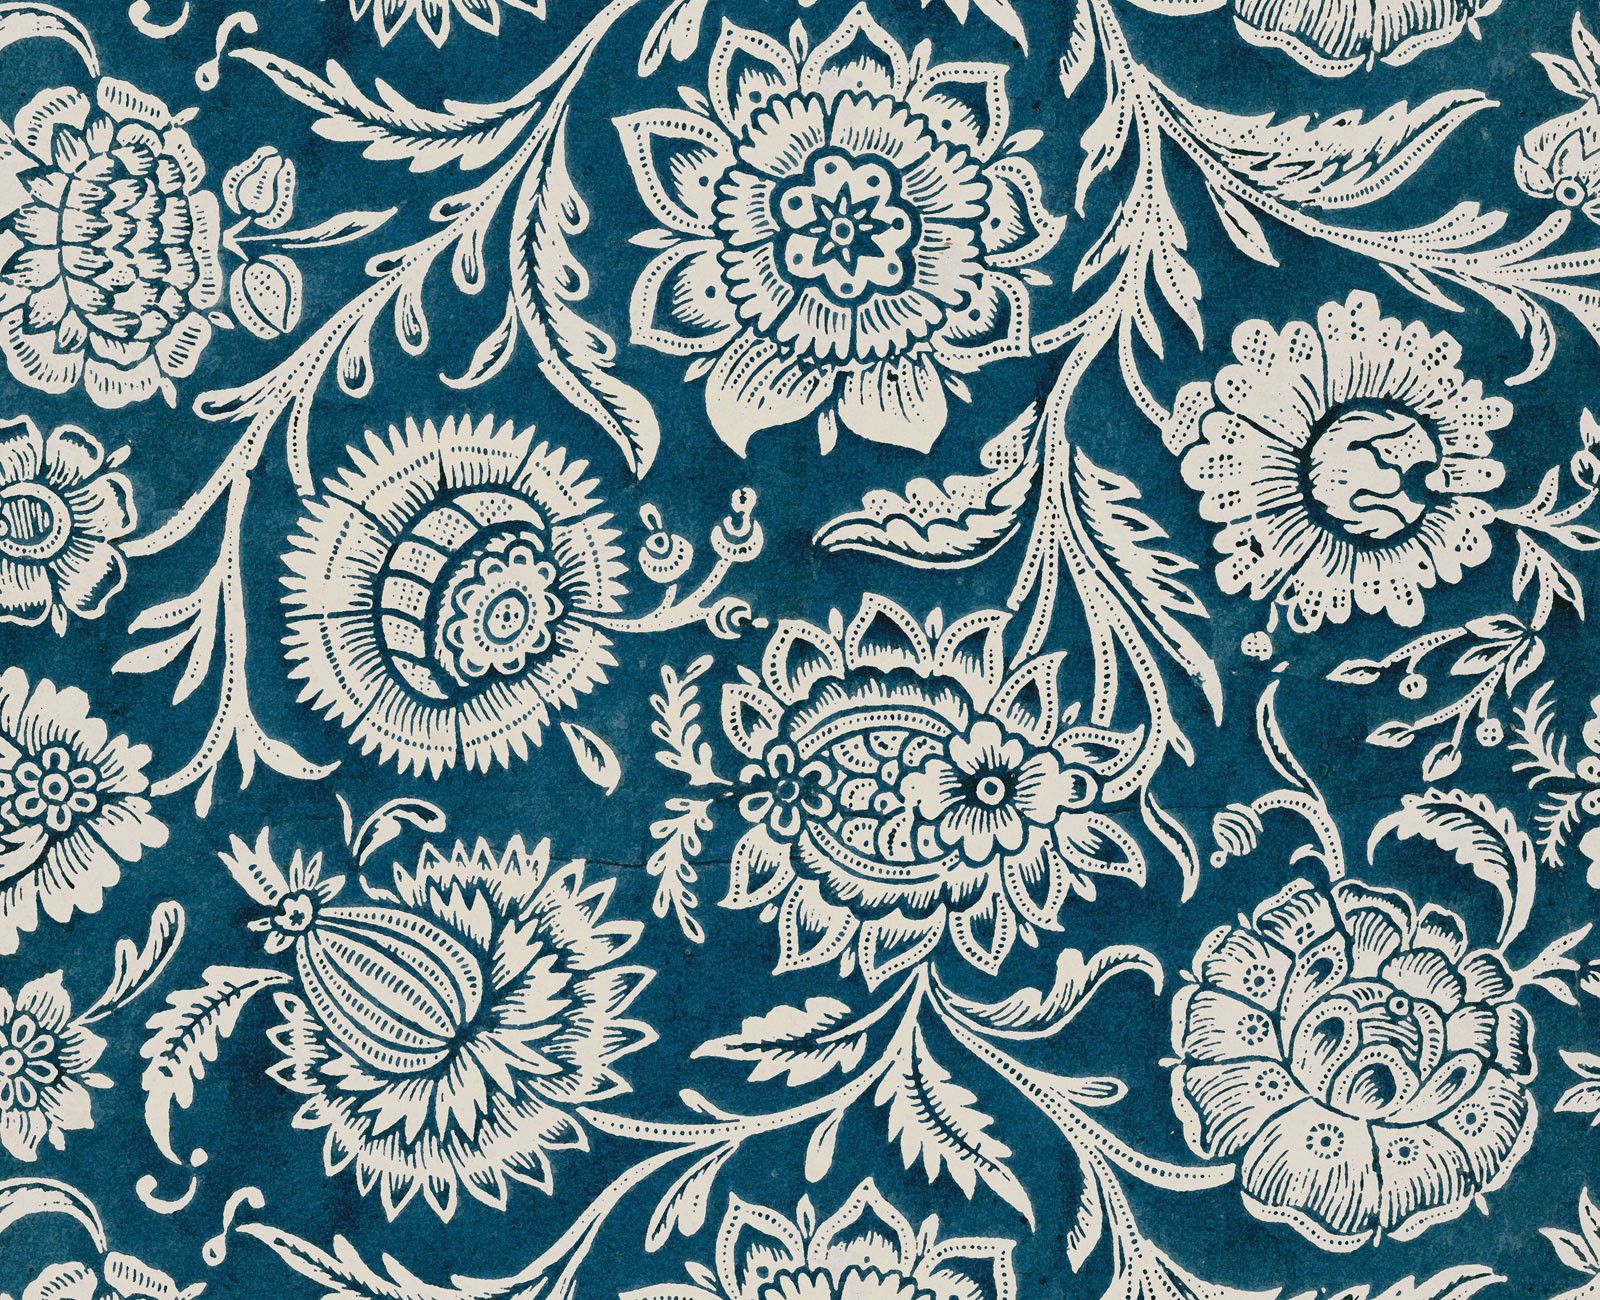 Domino wallpaper - peacock blue peonies | Flowers and leaves